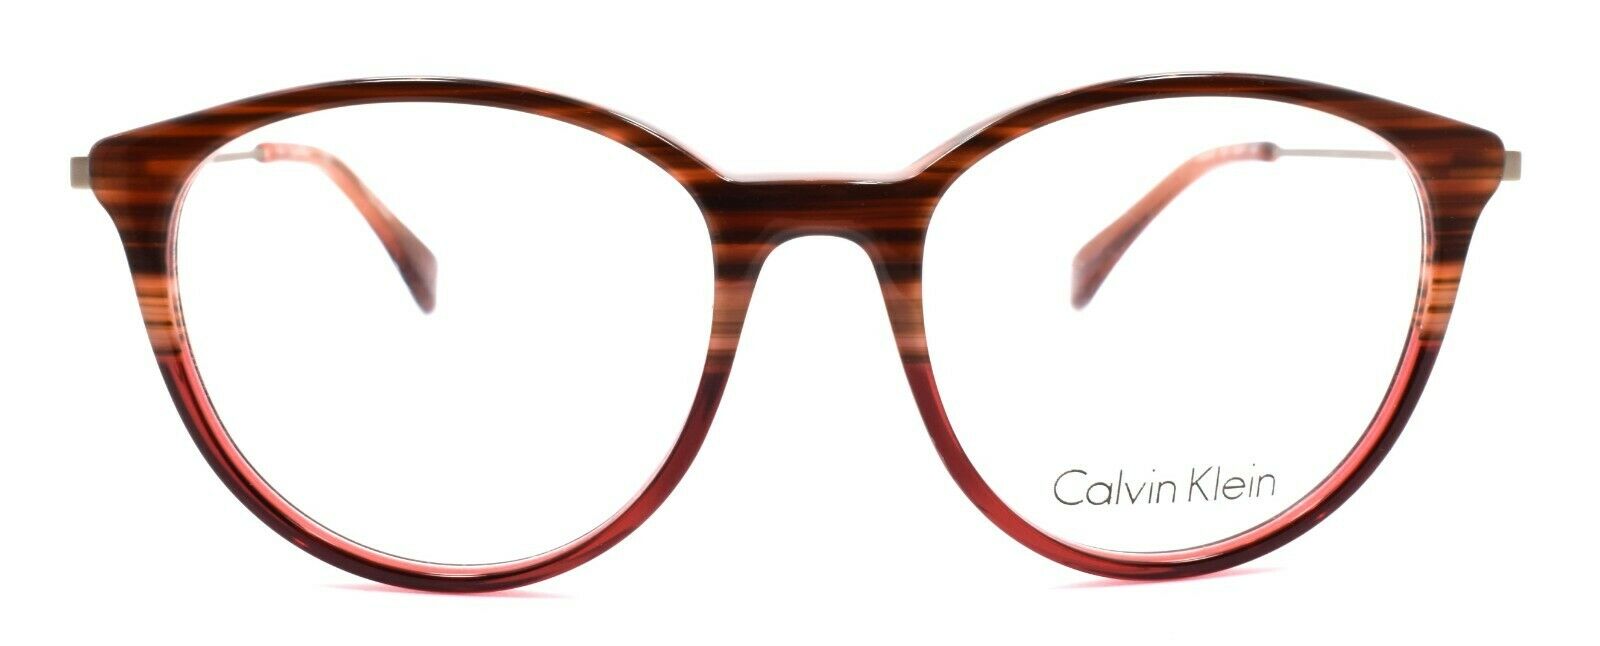 2-Calvin Klein CK5928 203 Women's Eyeglasses Frames 50-17-135 Striped Brown Rose-750779095690-IKSpecs